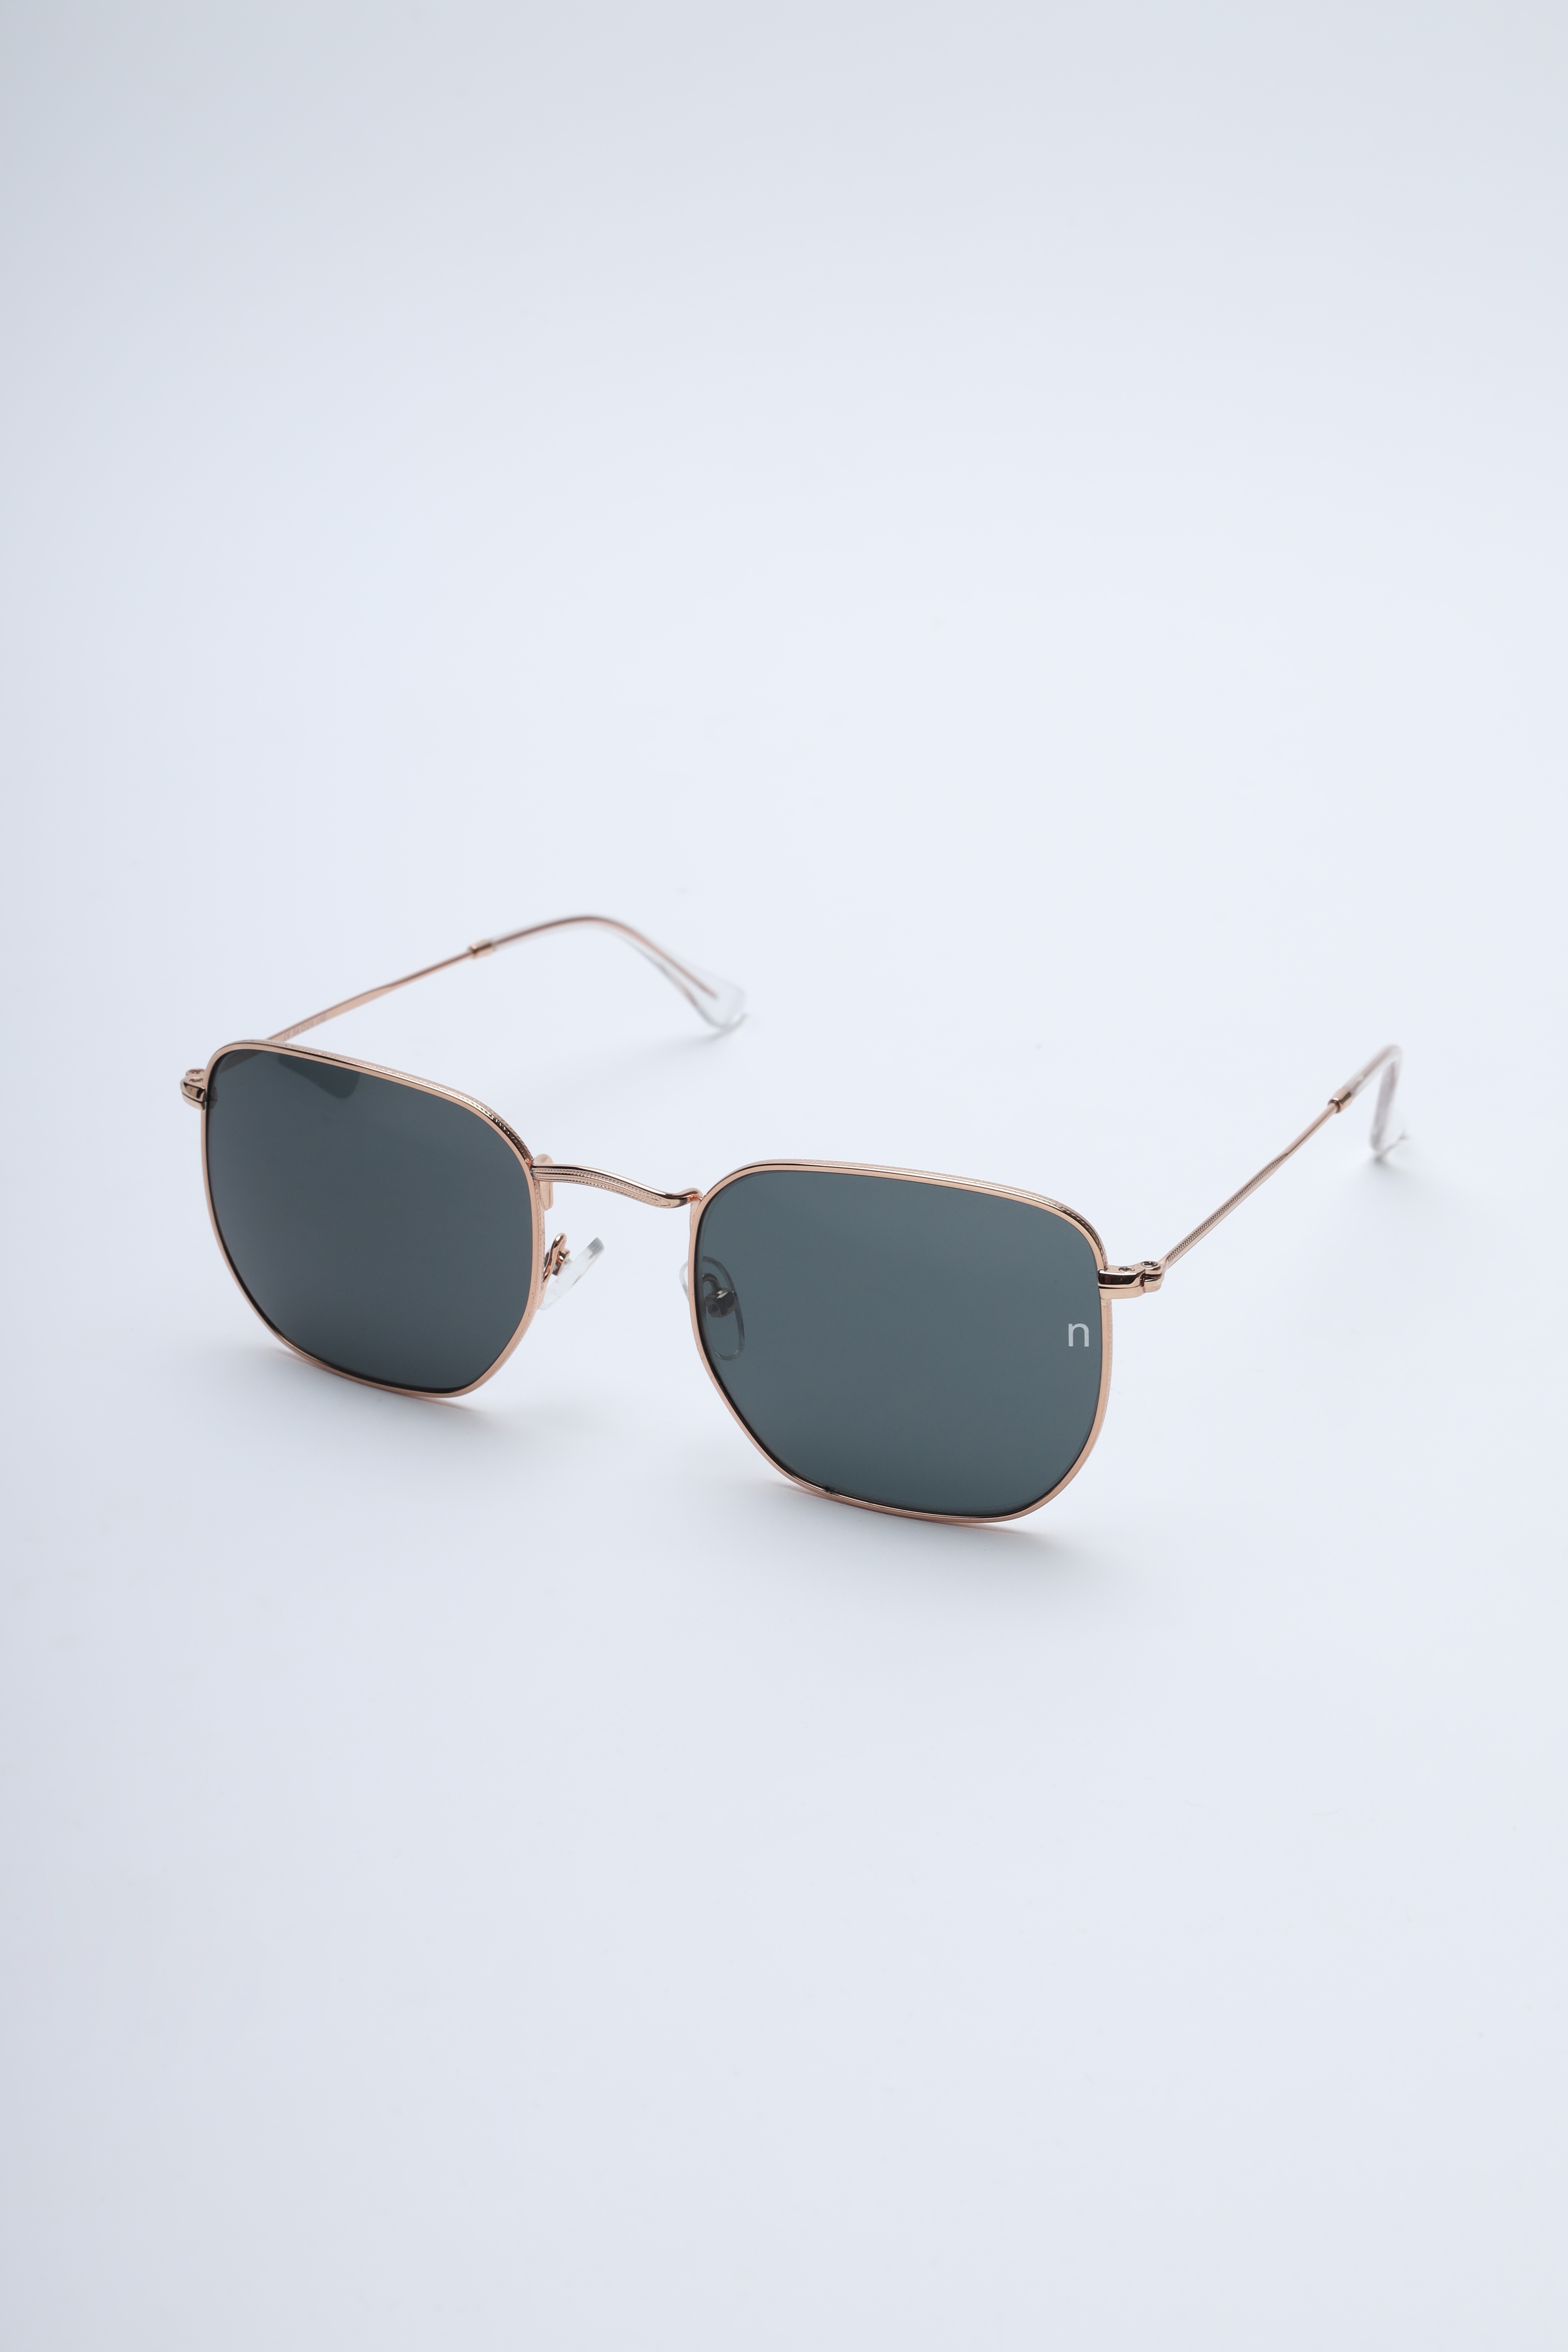 Noggah | Noggah Stainless Steel Gold Frame with Black Glass UV Protection Lens  Large Size Unisex Sunglasses 